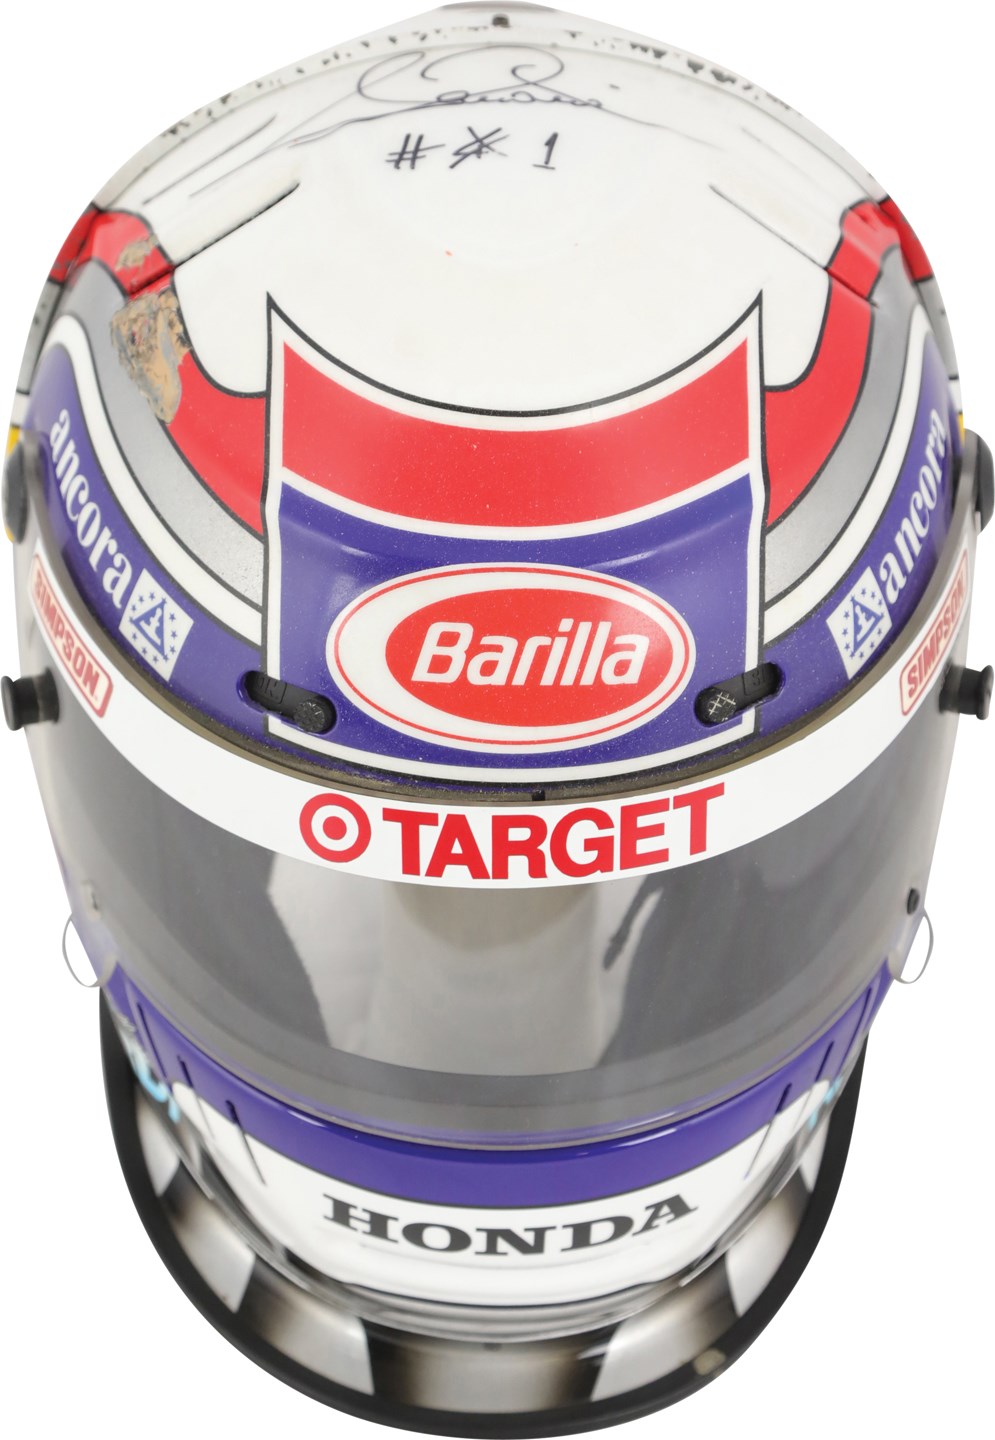 Olympics and All Sports - 1997 Alex Zanardi Signed Race Worn Helmet from Marlboro 500 Crash - His Last Helmet of Points Leading Season